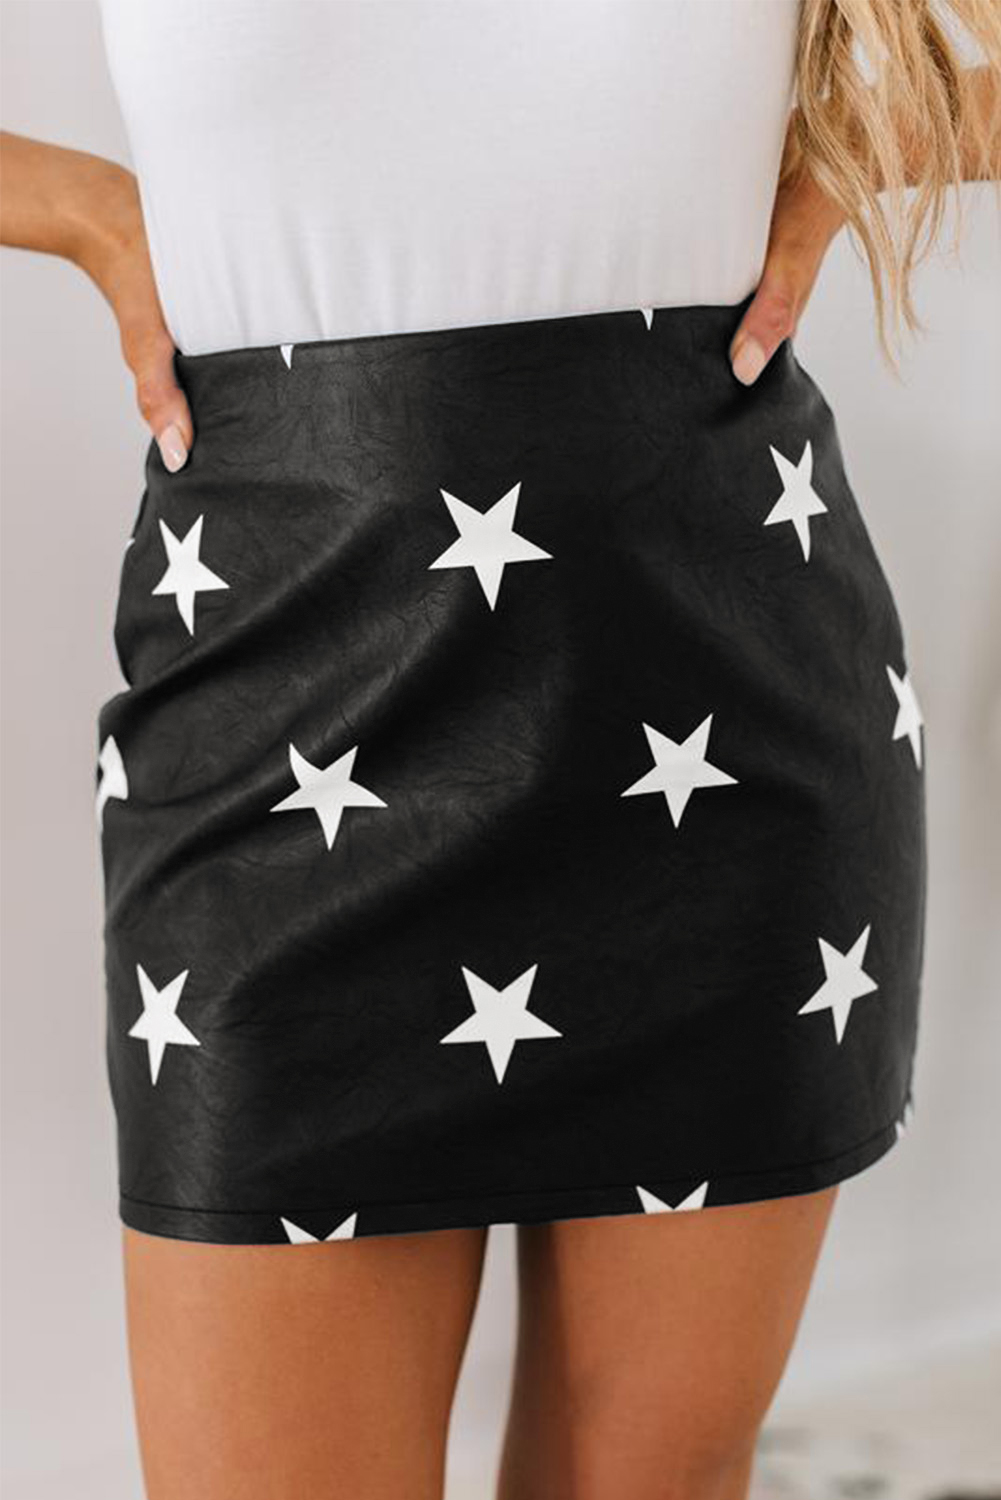 Star Print Faux Leather Mini Skirt - (US 4-6)S